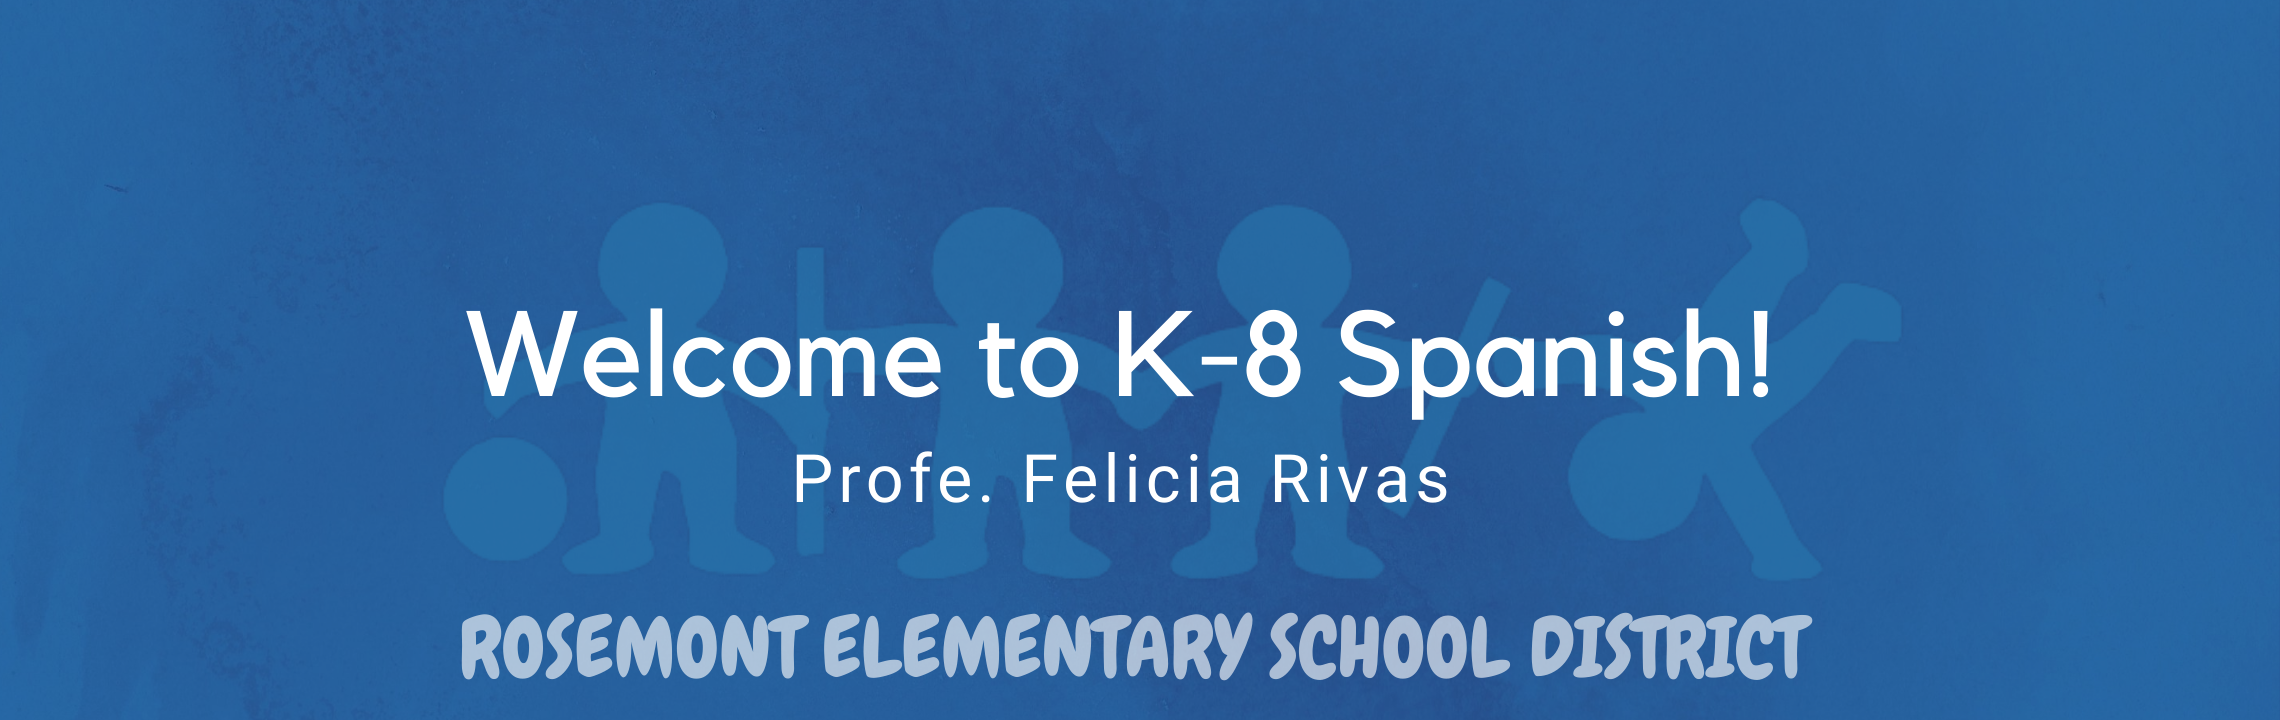 Welcome to K-8 Spanish! Profe. Felicia Rivas, Rosemont Elementary Schools 